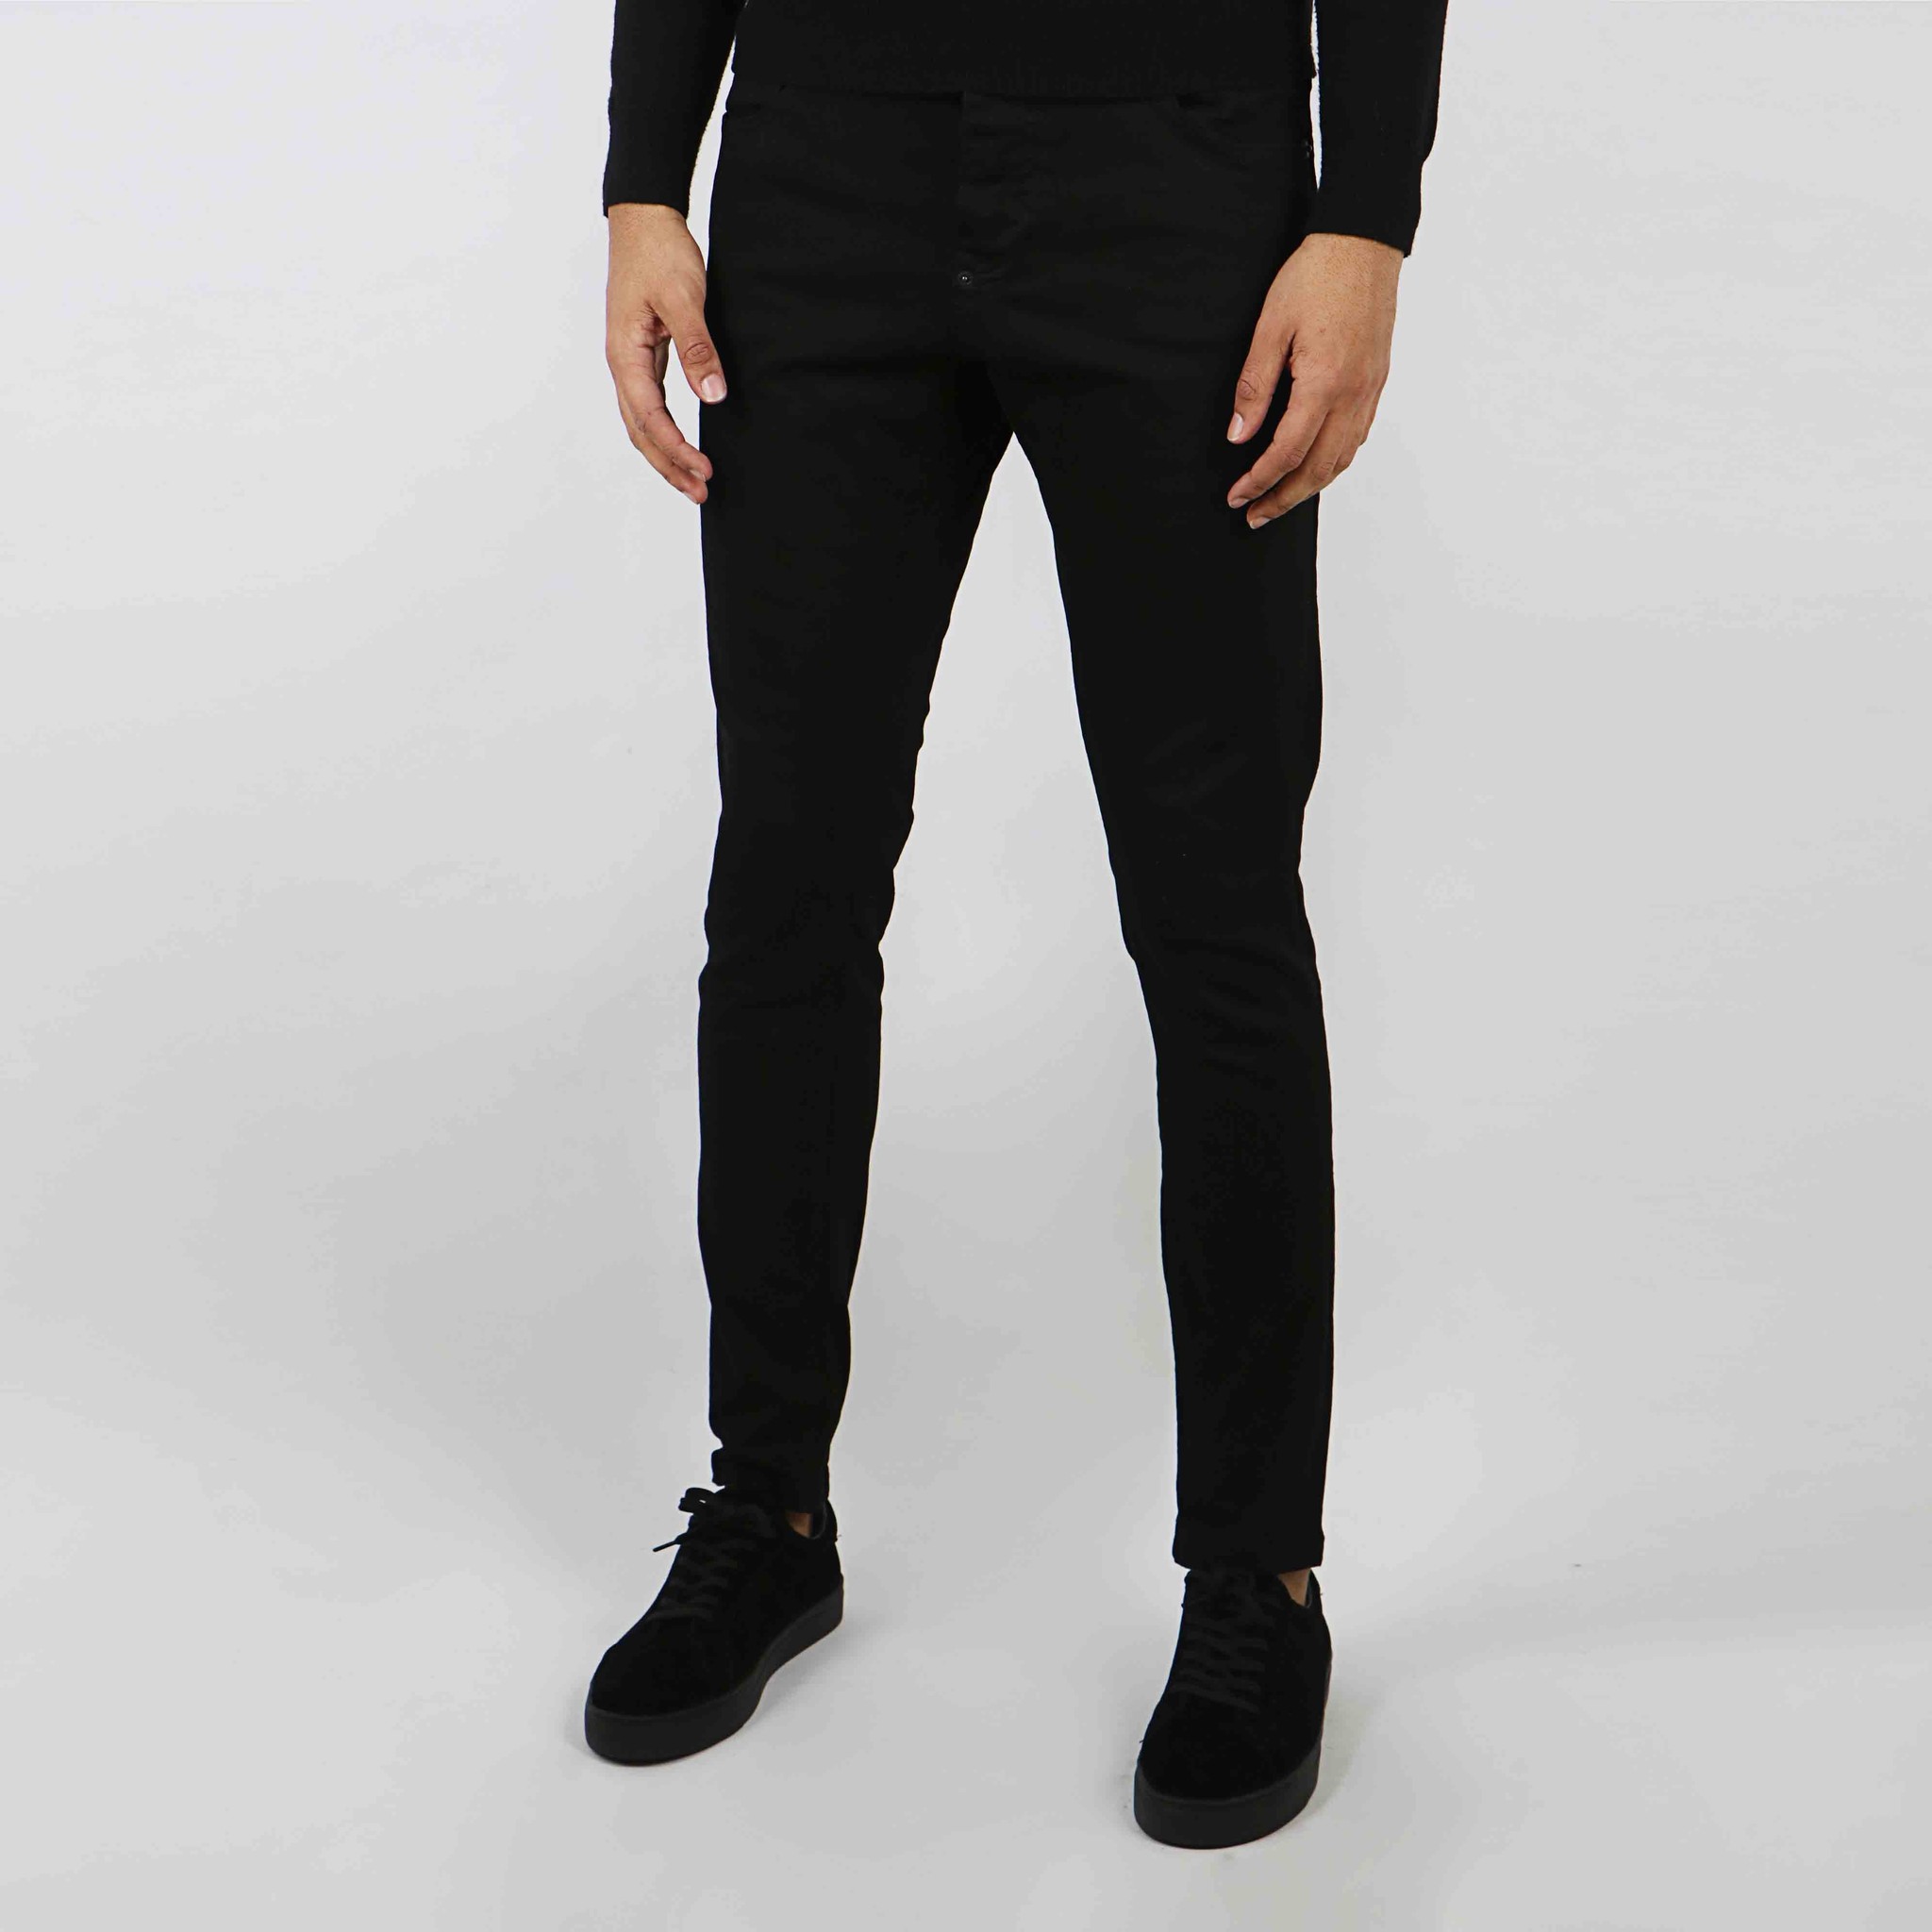 Zwarte Skinny Pantalon Heren Spain, SAVE 37% - horiconphoenix.com